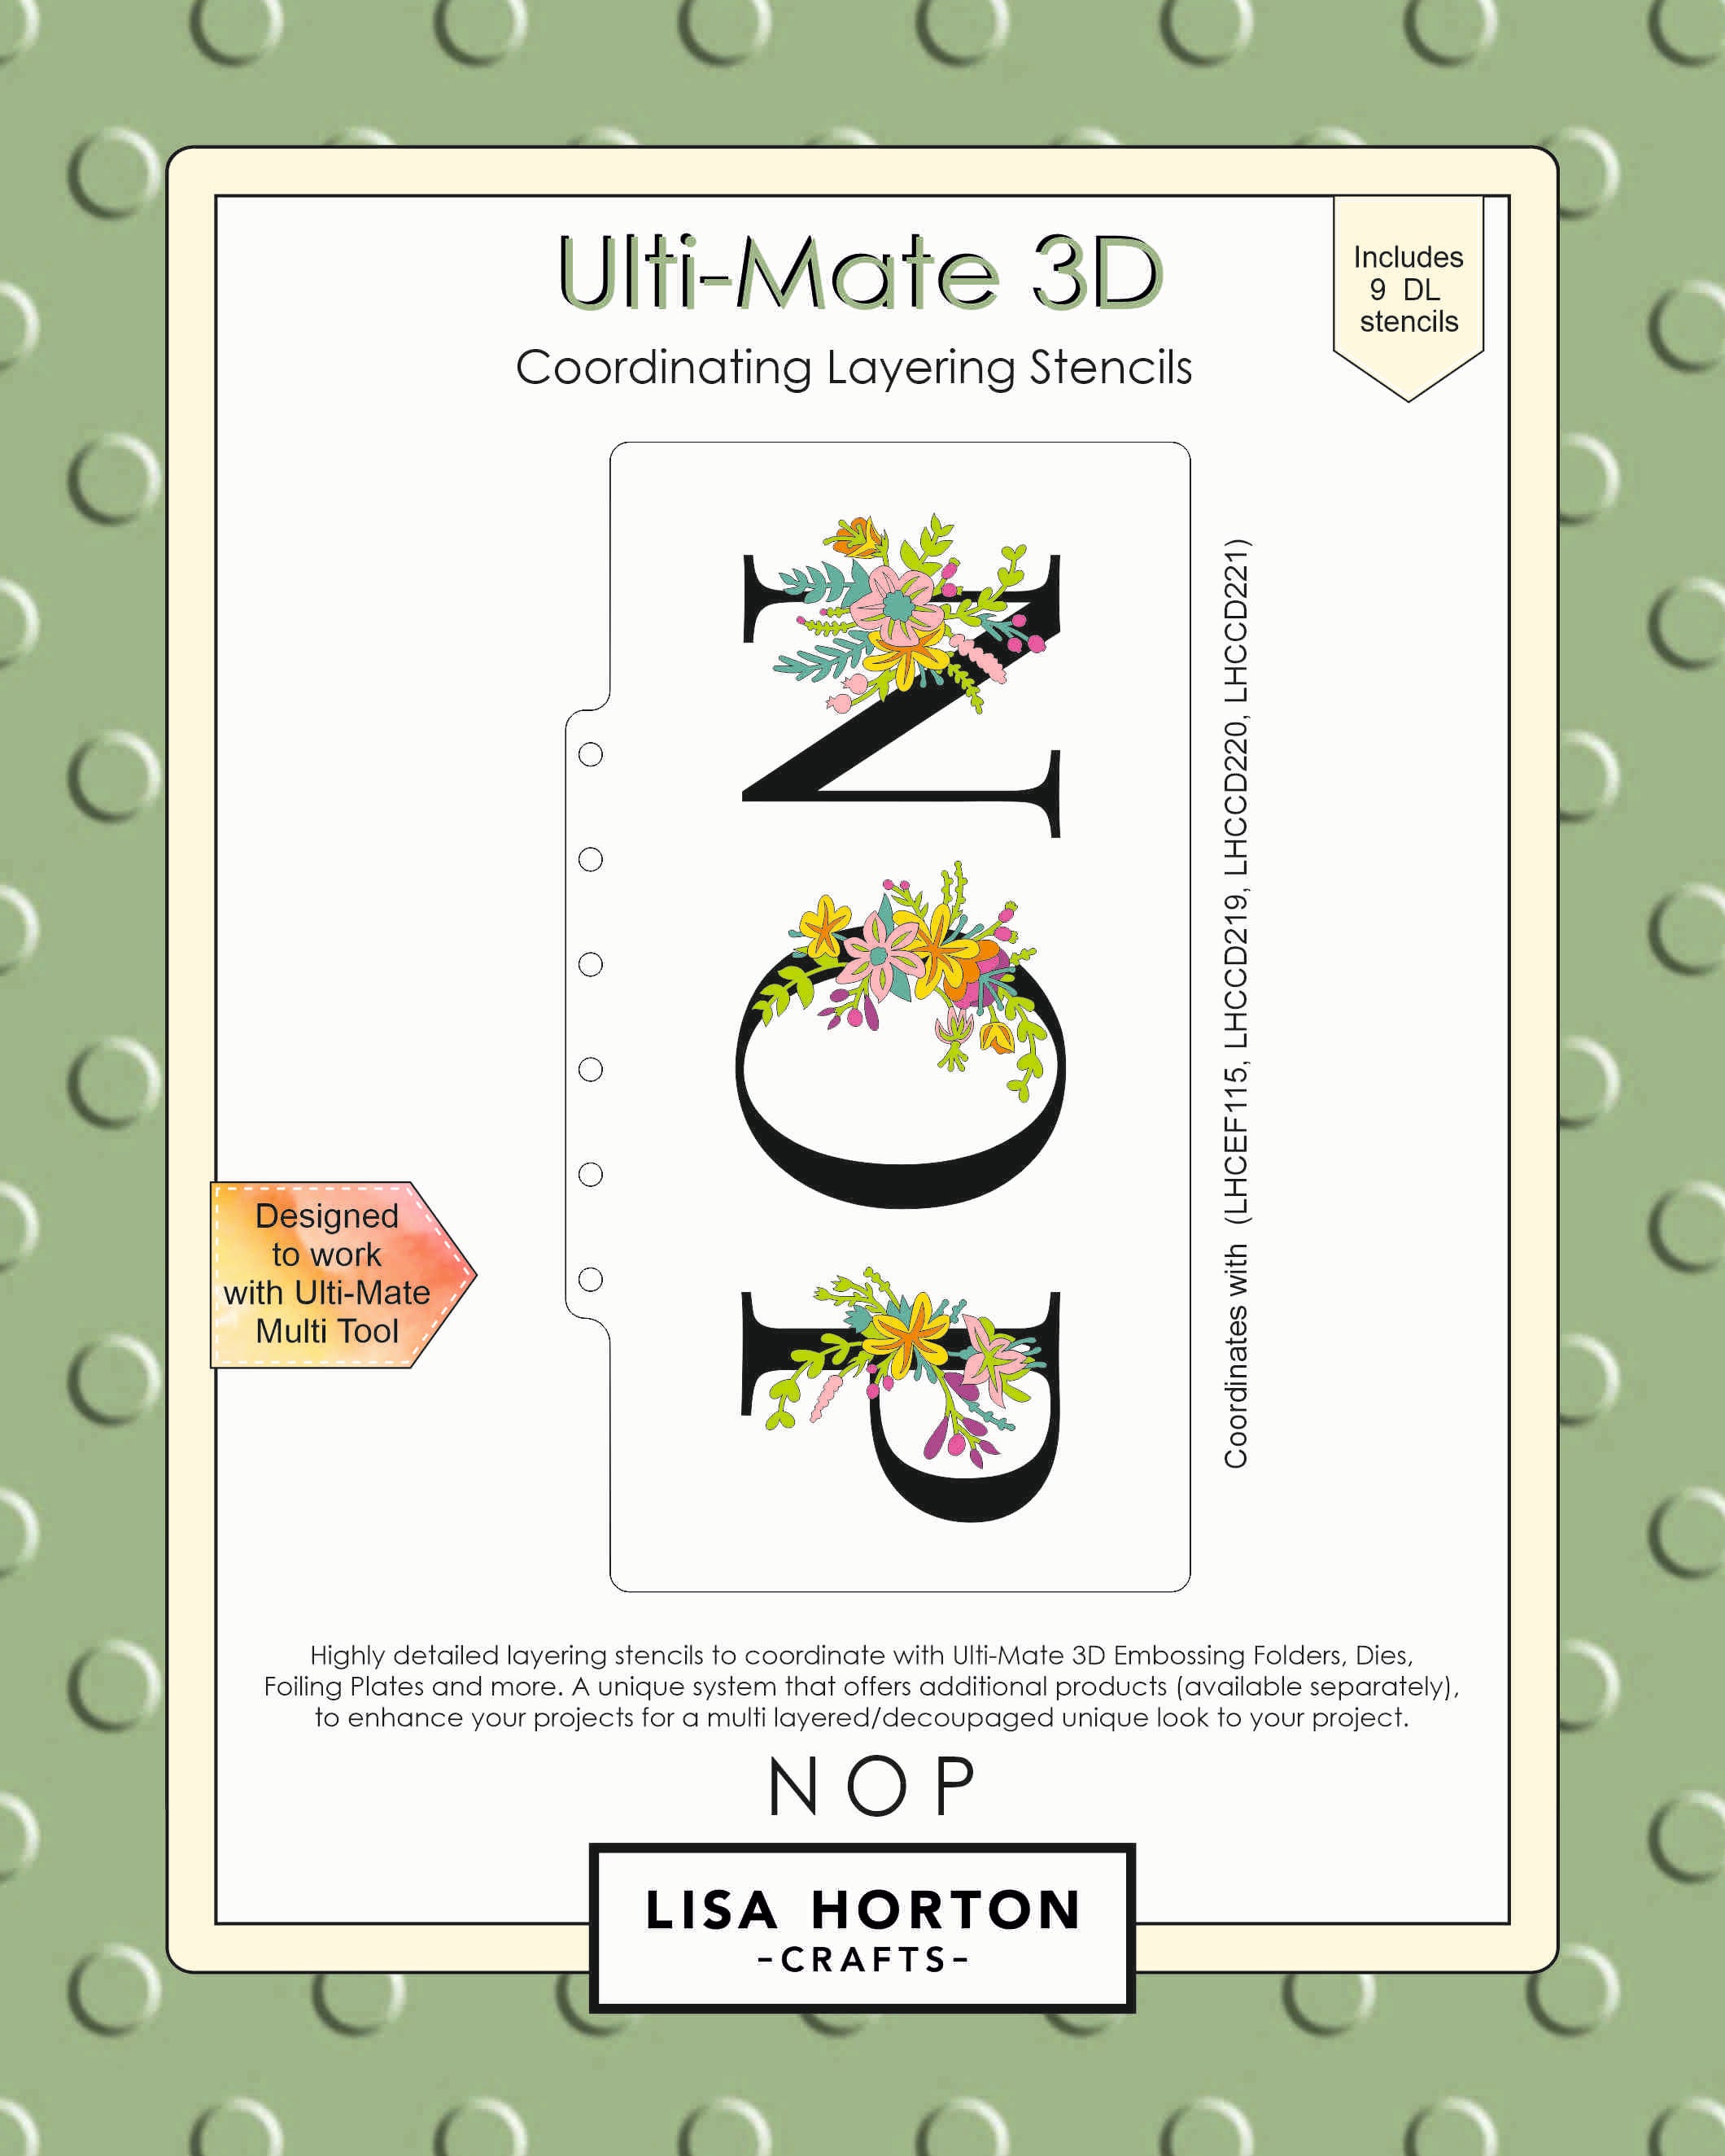 Lisa Horton Crafts Ulti-Mate 3D Slimline Layering Stencils NOP